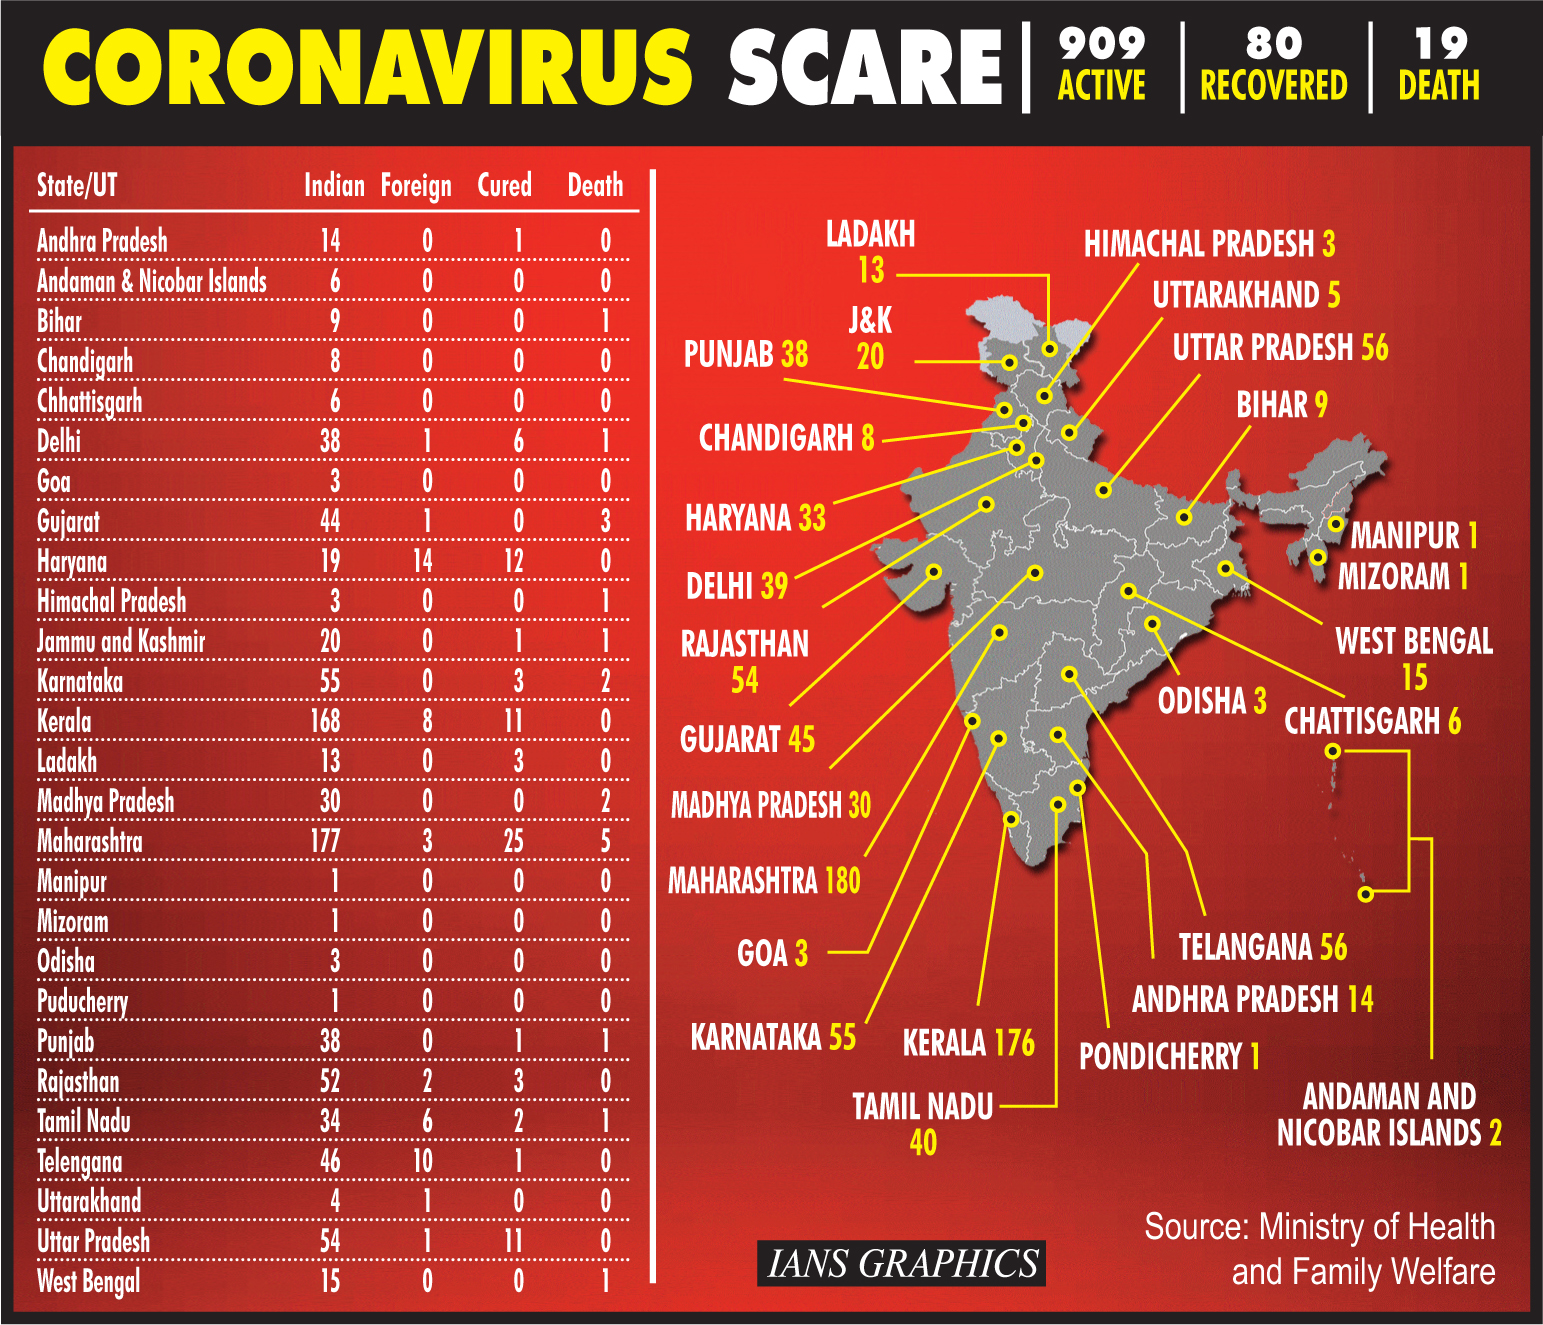 COVID-19: India's total corona count reaches 909